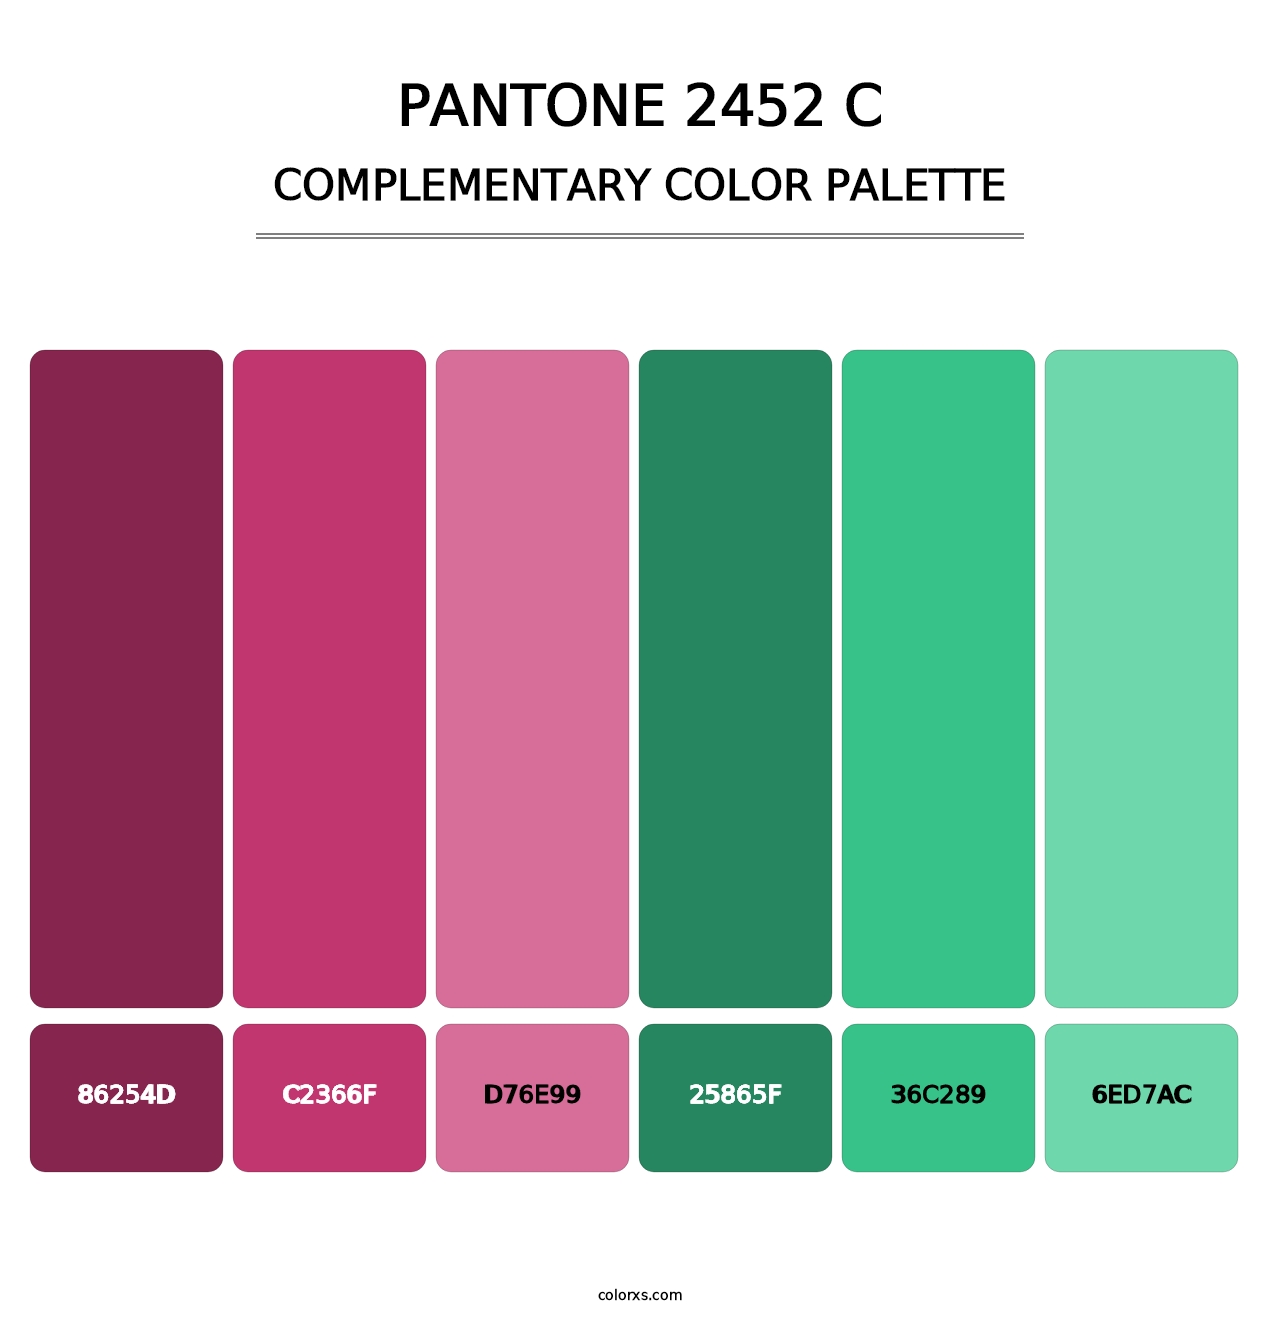 PANTONE 2452 C - Complementary Color Palette